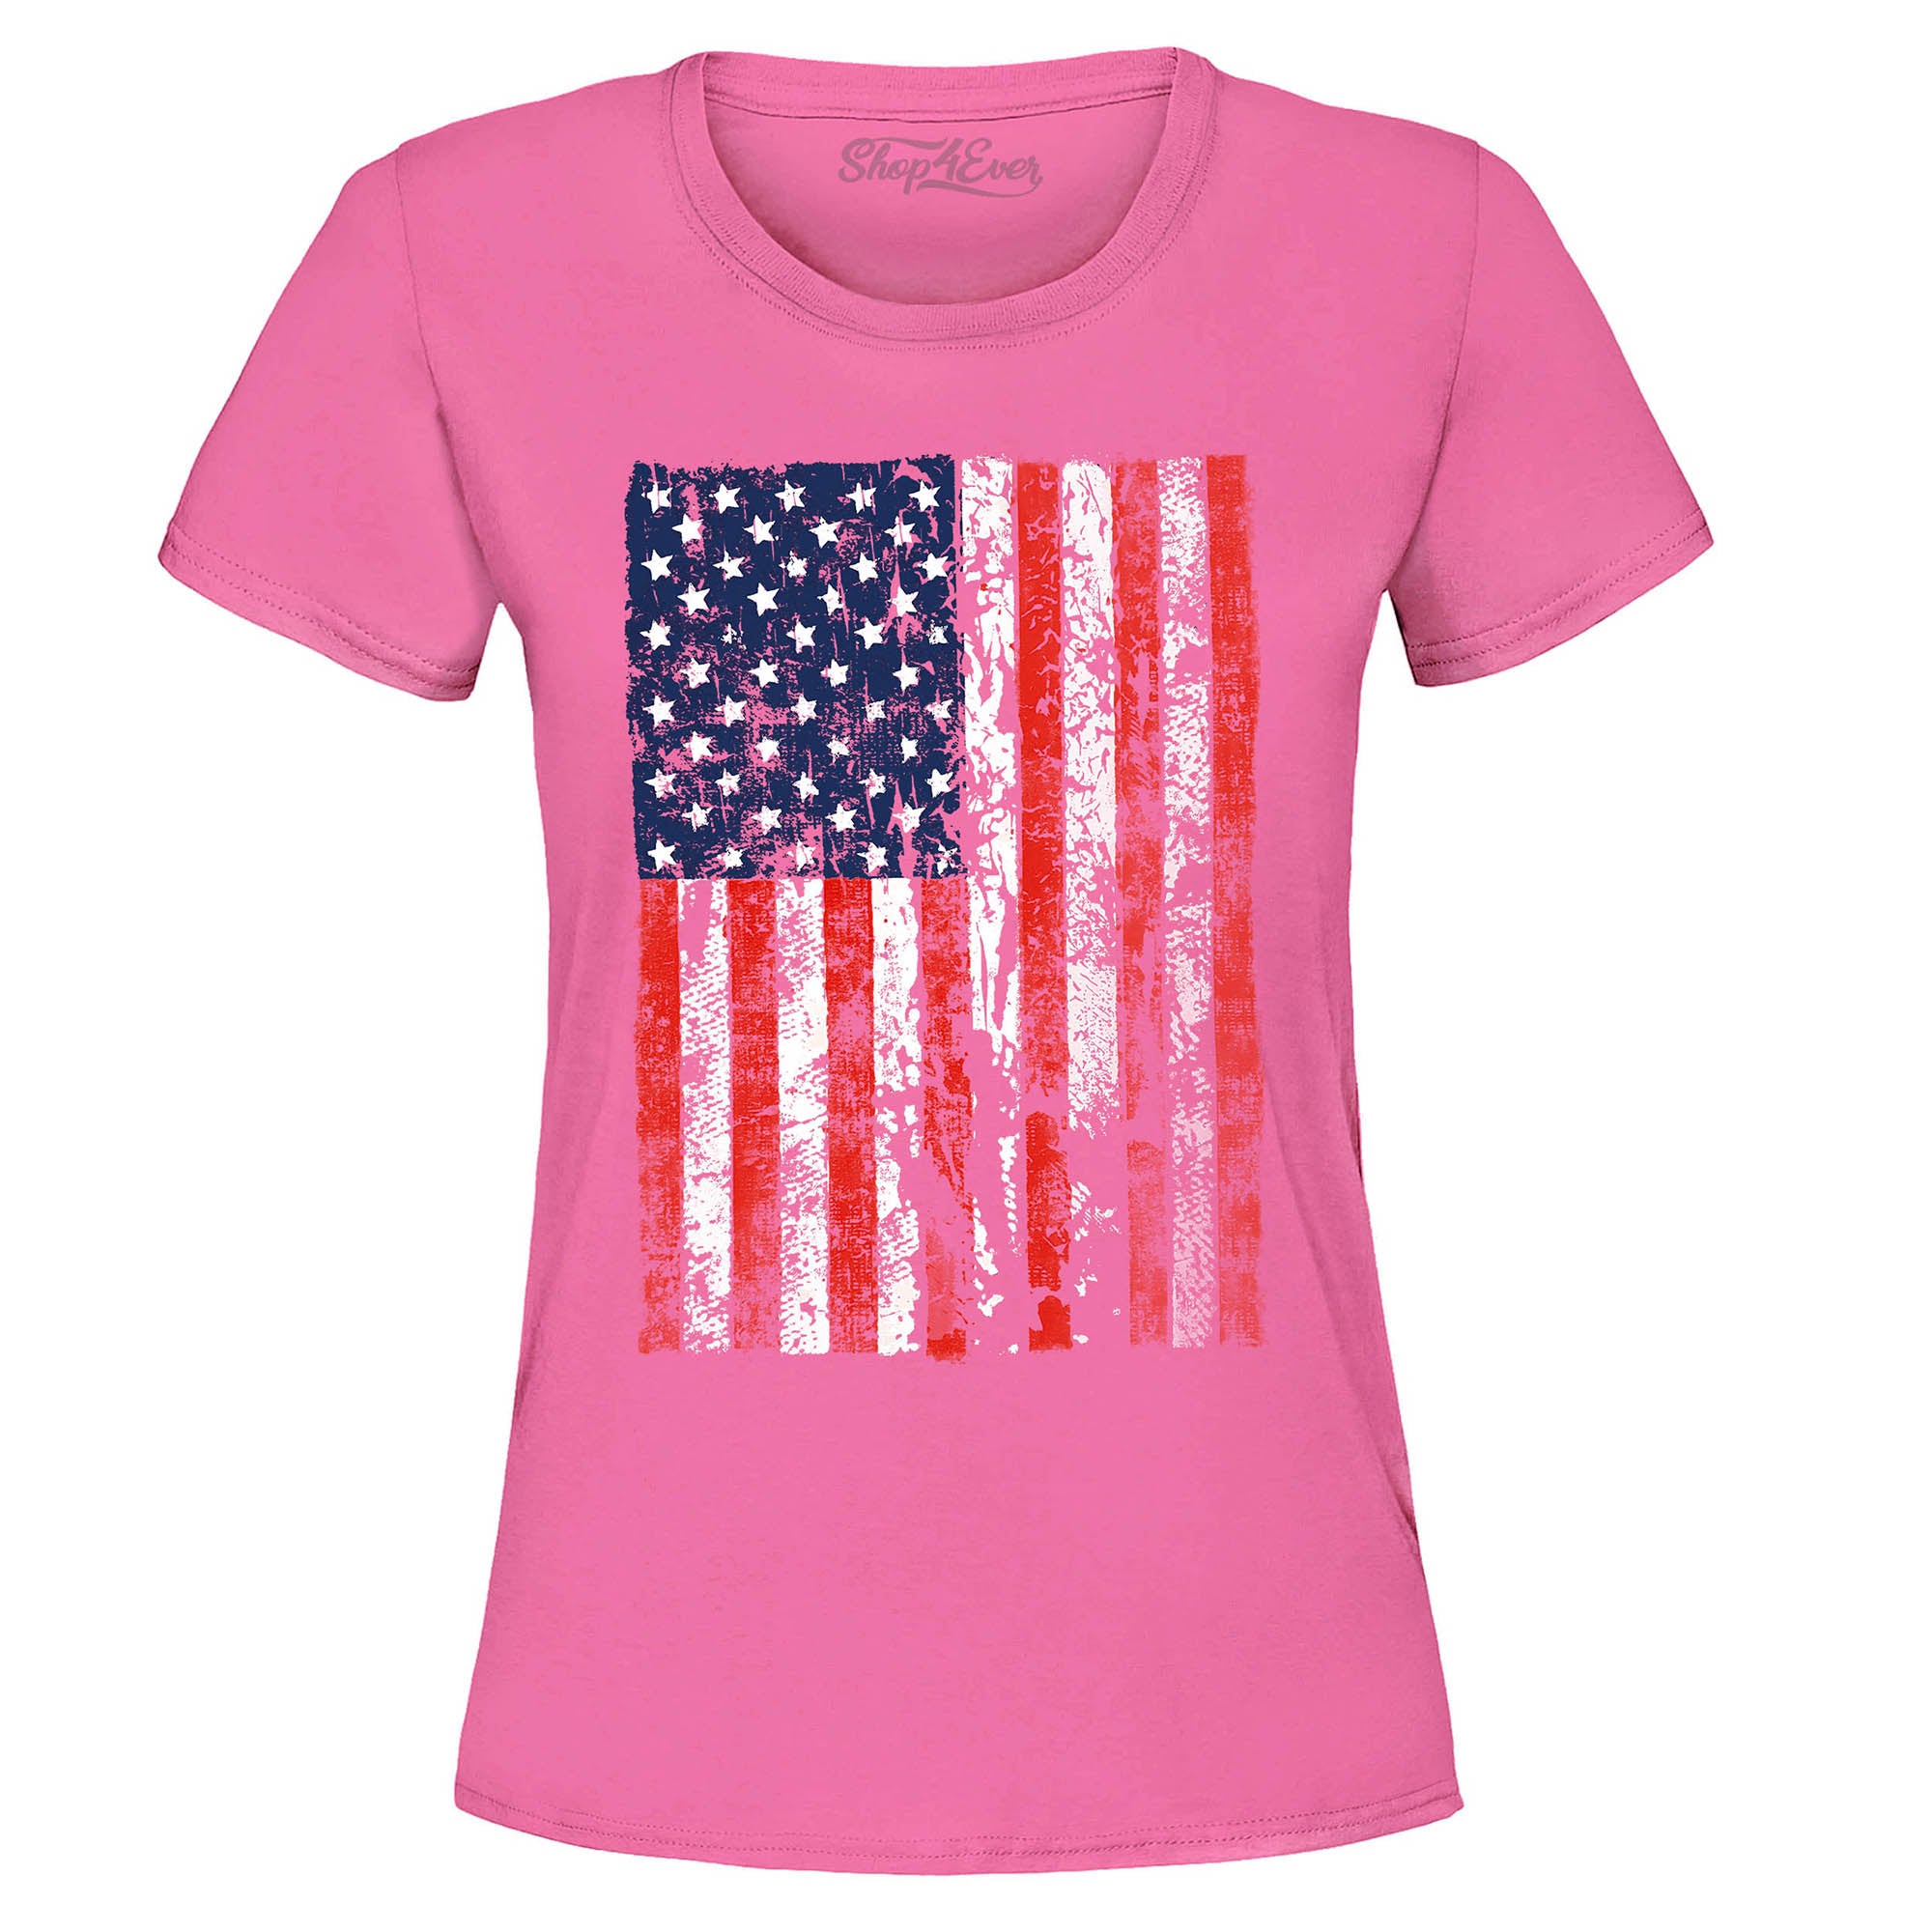 United States of America Flag Women's T-Shirt USA Flag Shirts